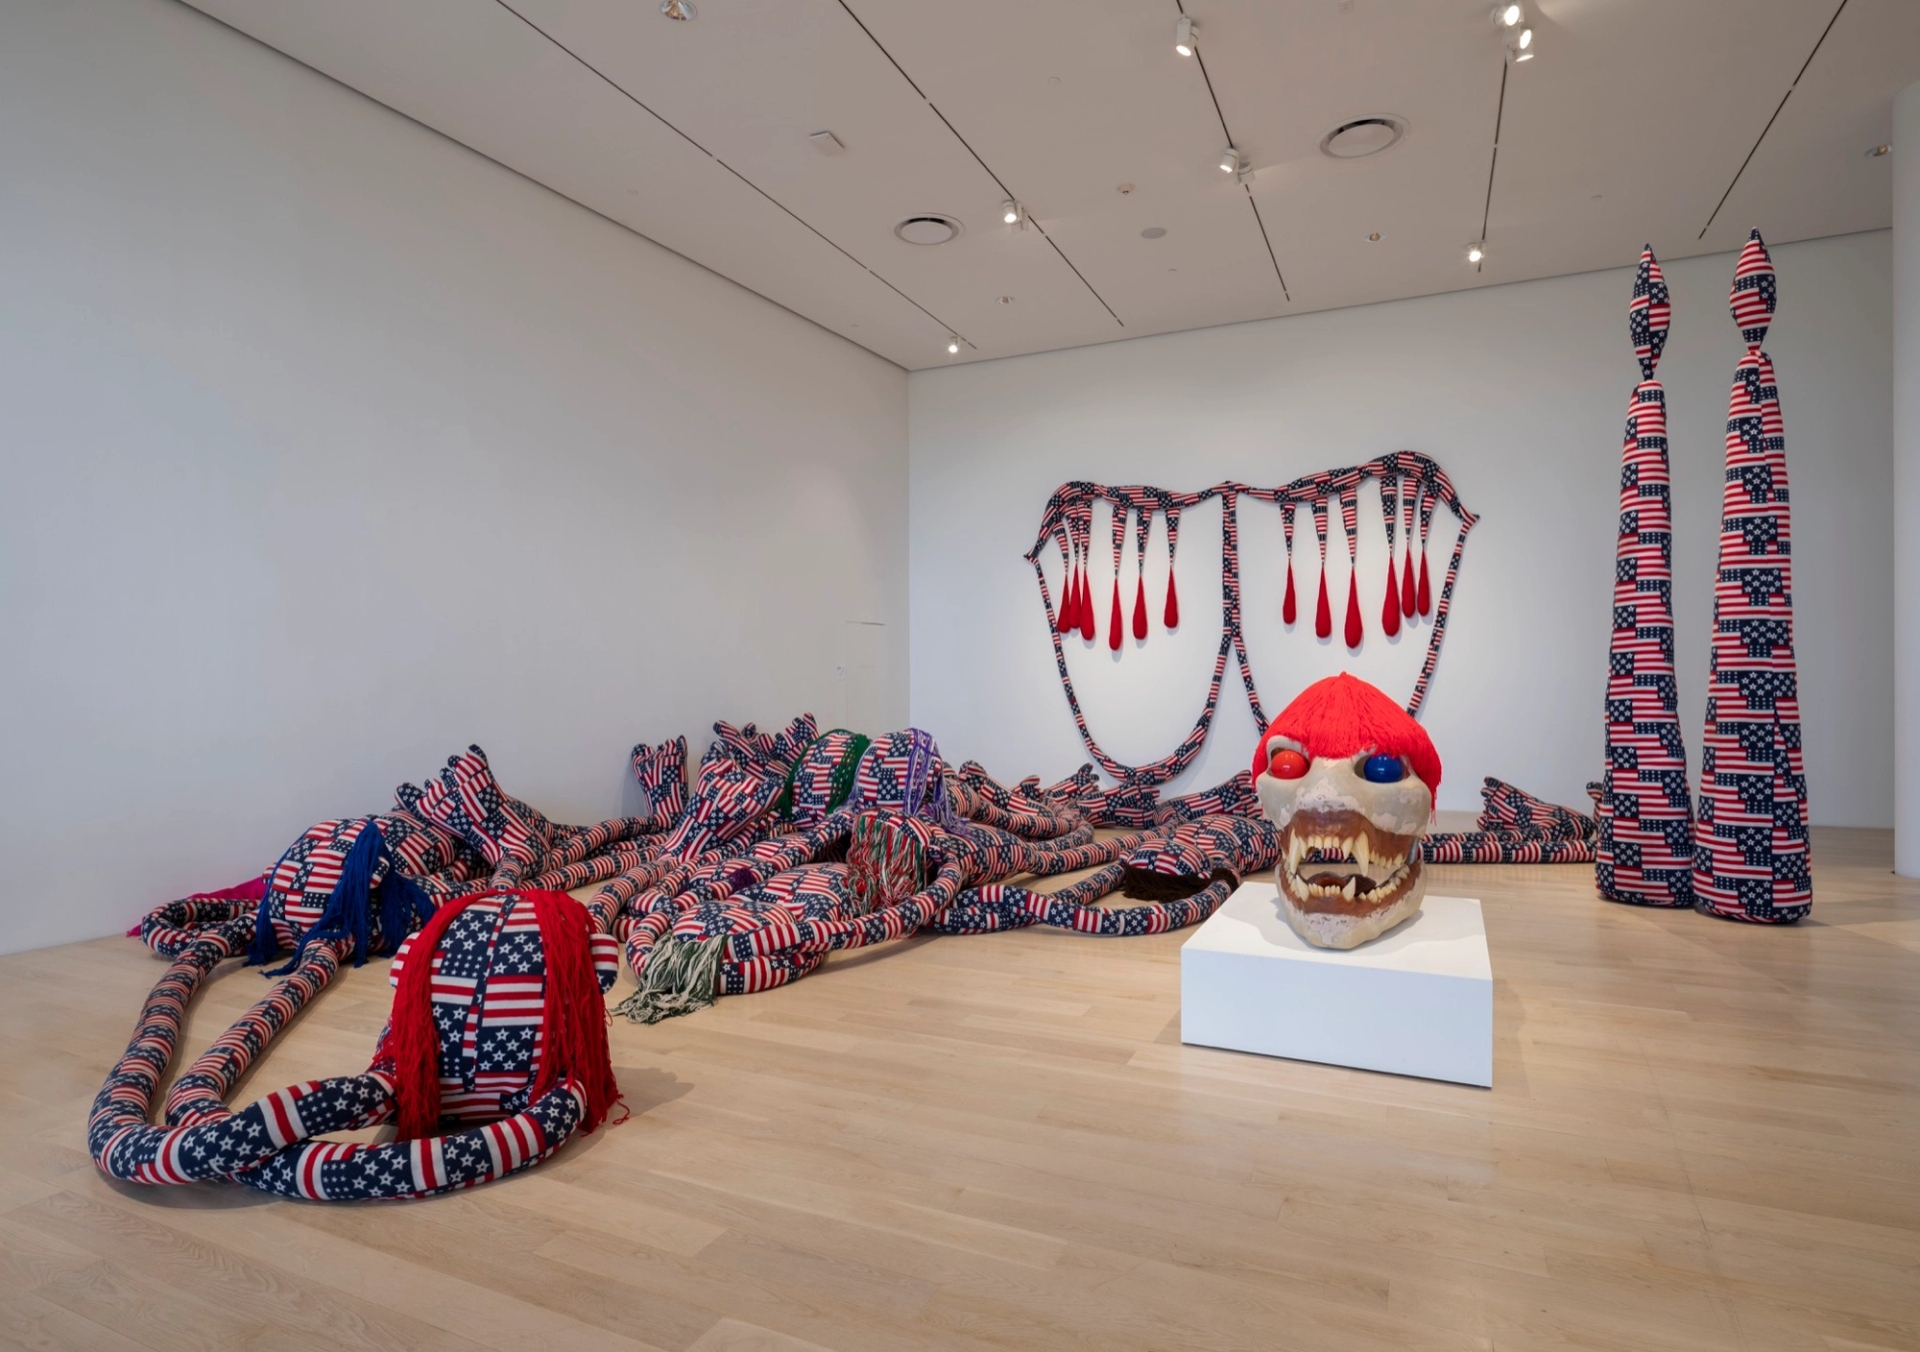 Installation view: "Sterling Ruby" at the Institute of Contemporary Art, Miami. Nov 7, 2019 – Feb 2, 2020. Photo: Fredrik Nilsen Studio.